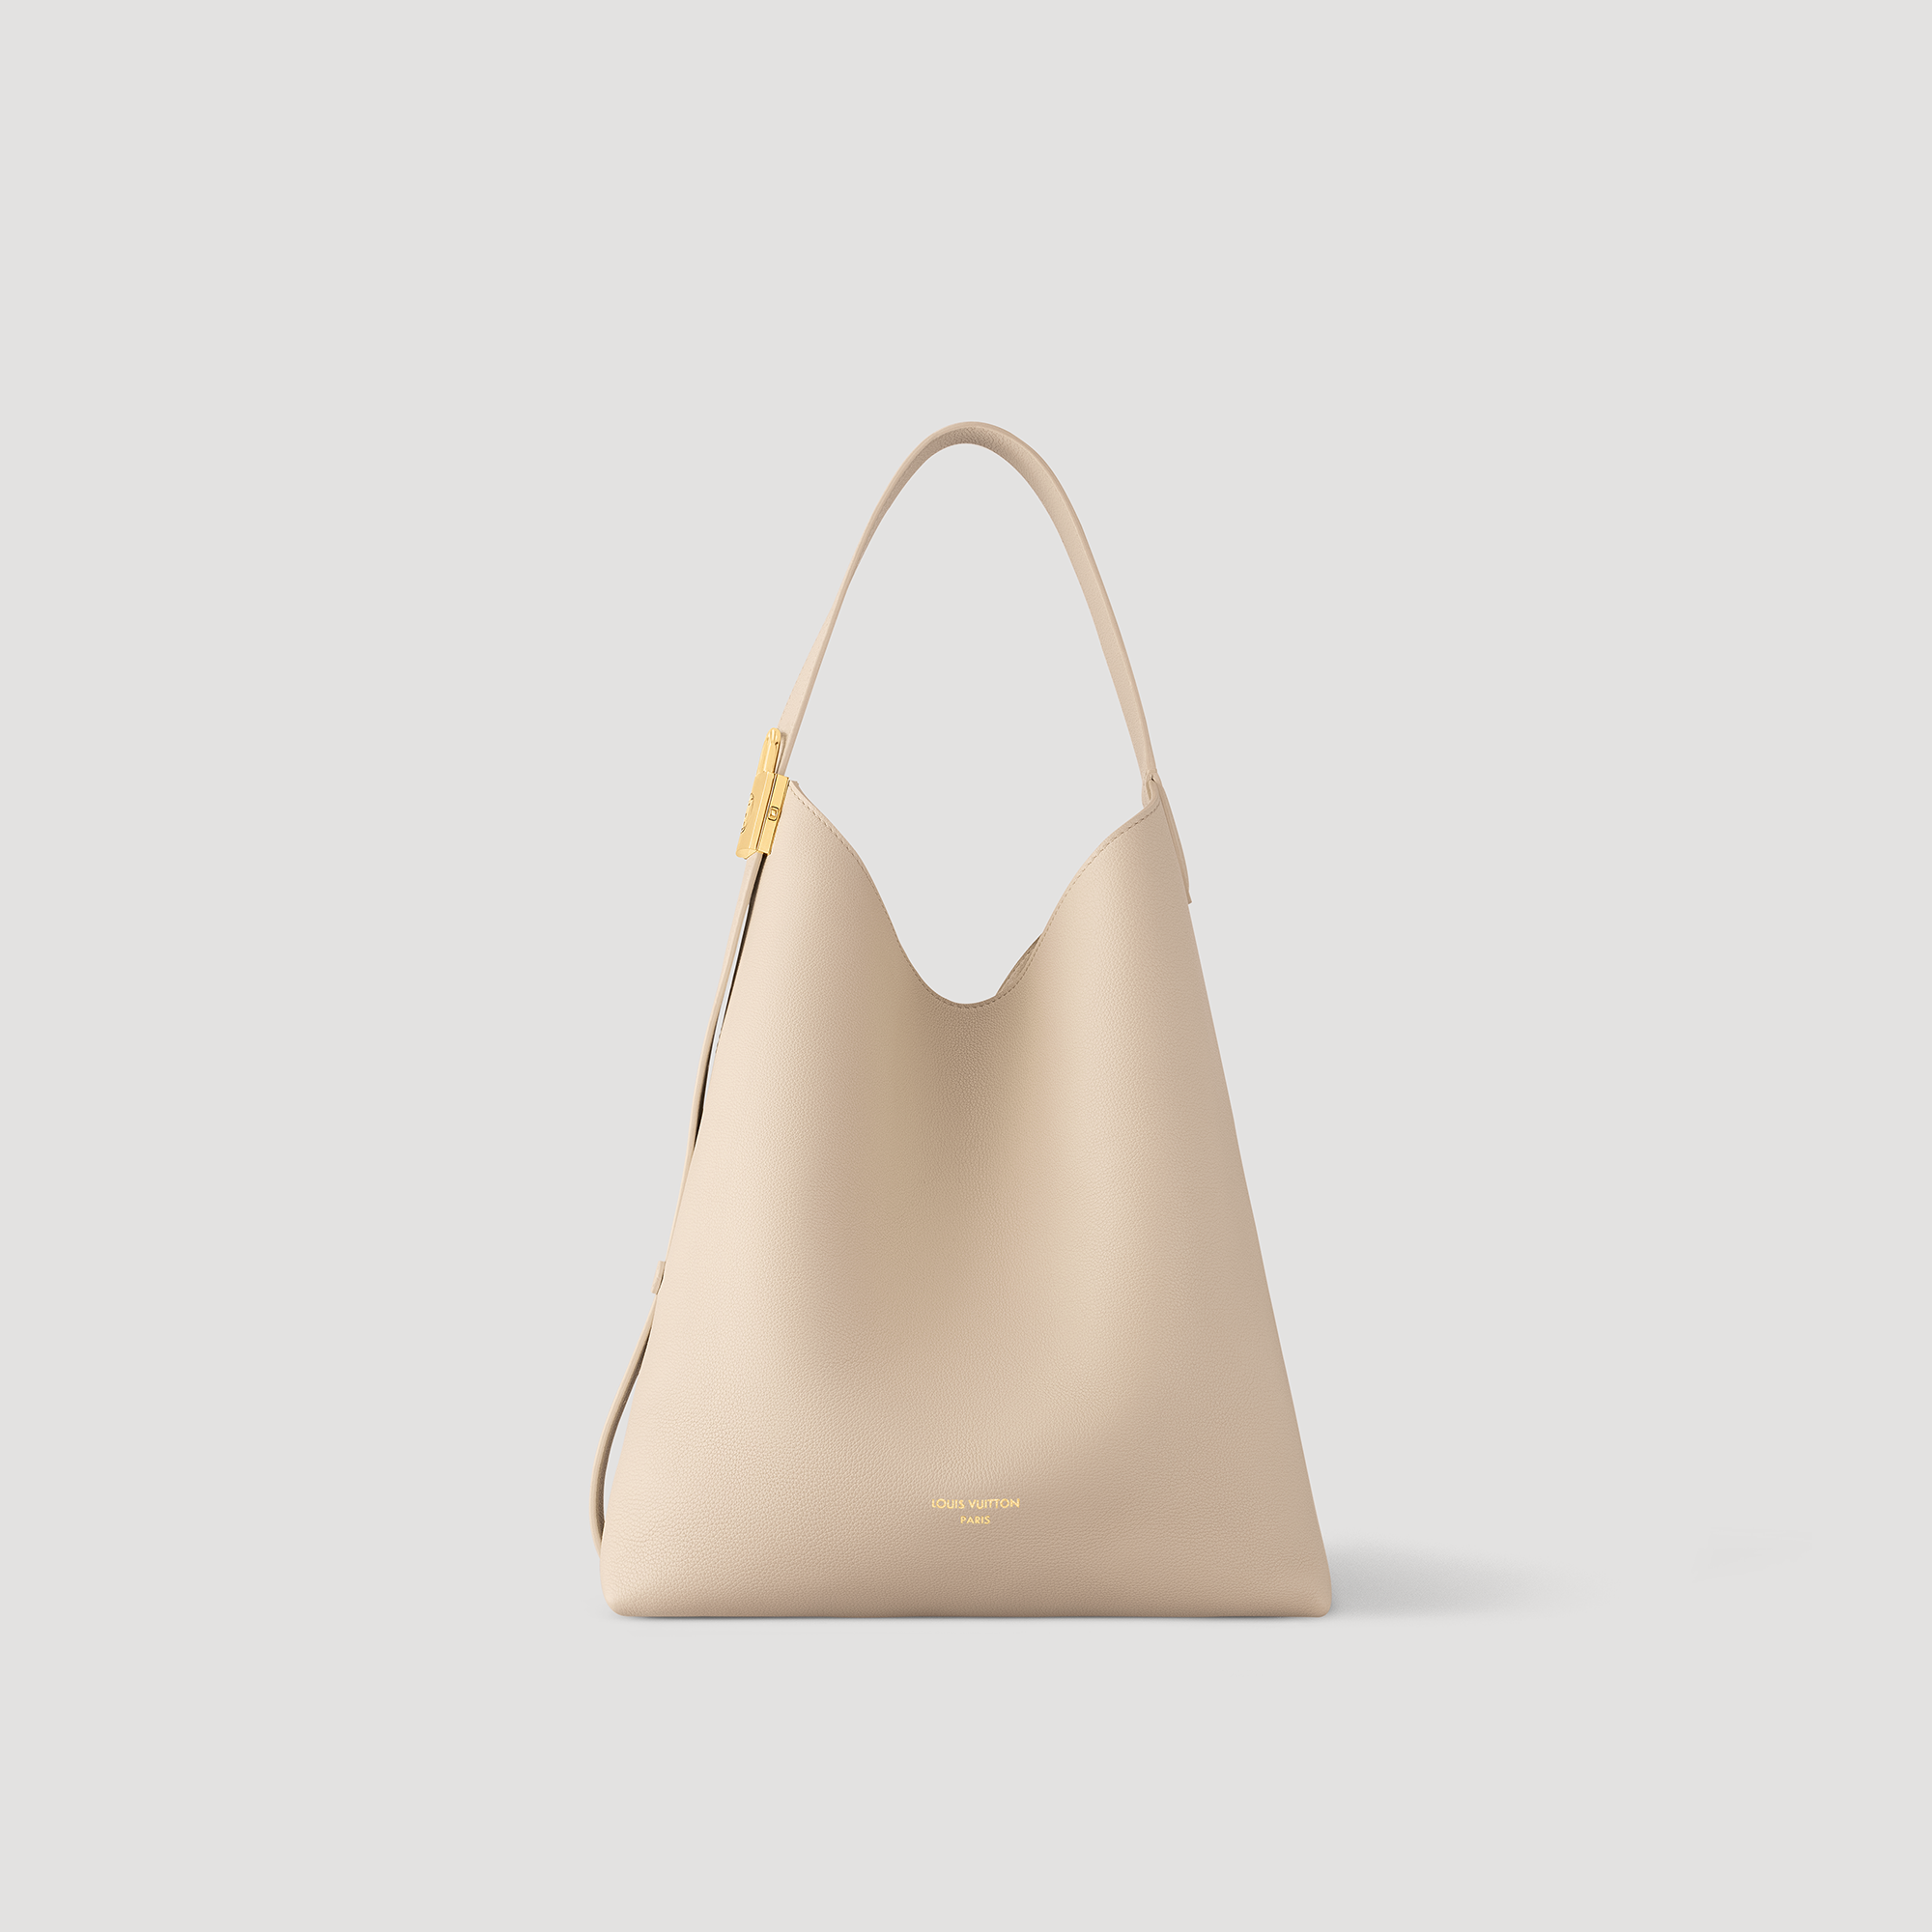 Louis Vuitton slouchy handbag in white